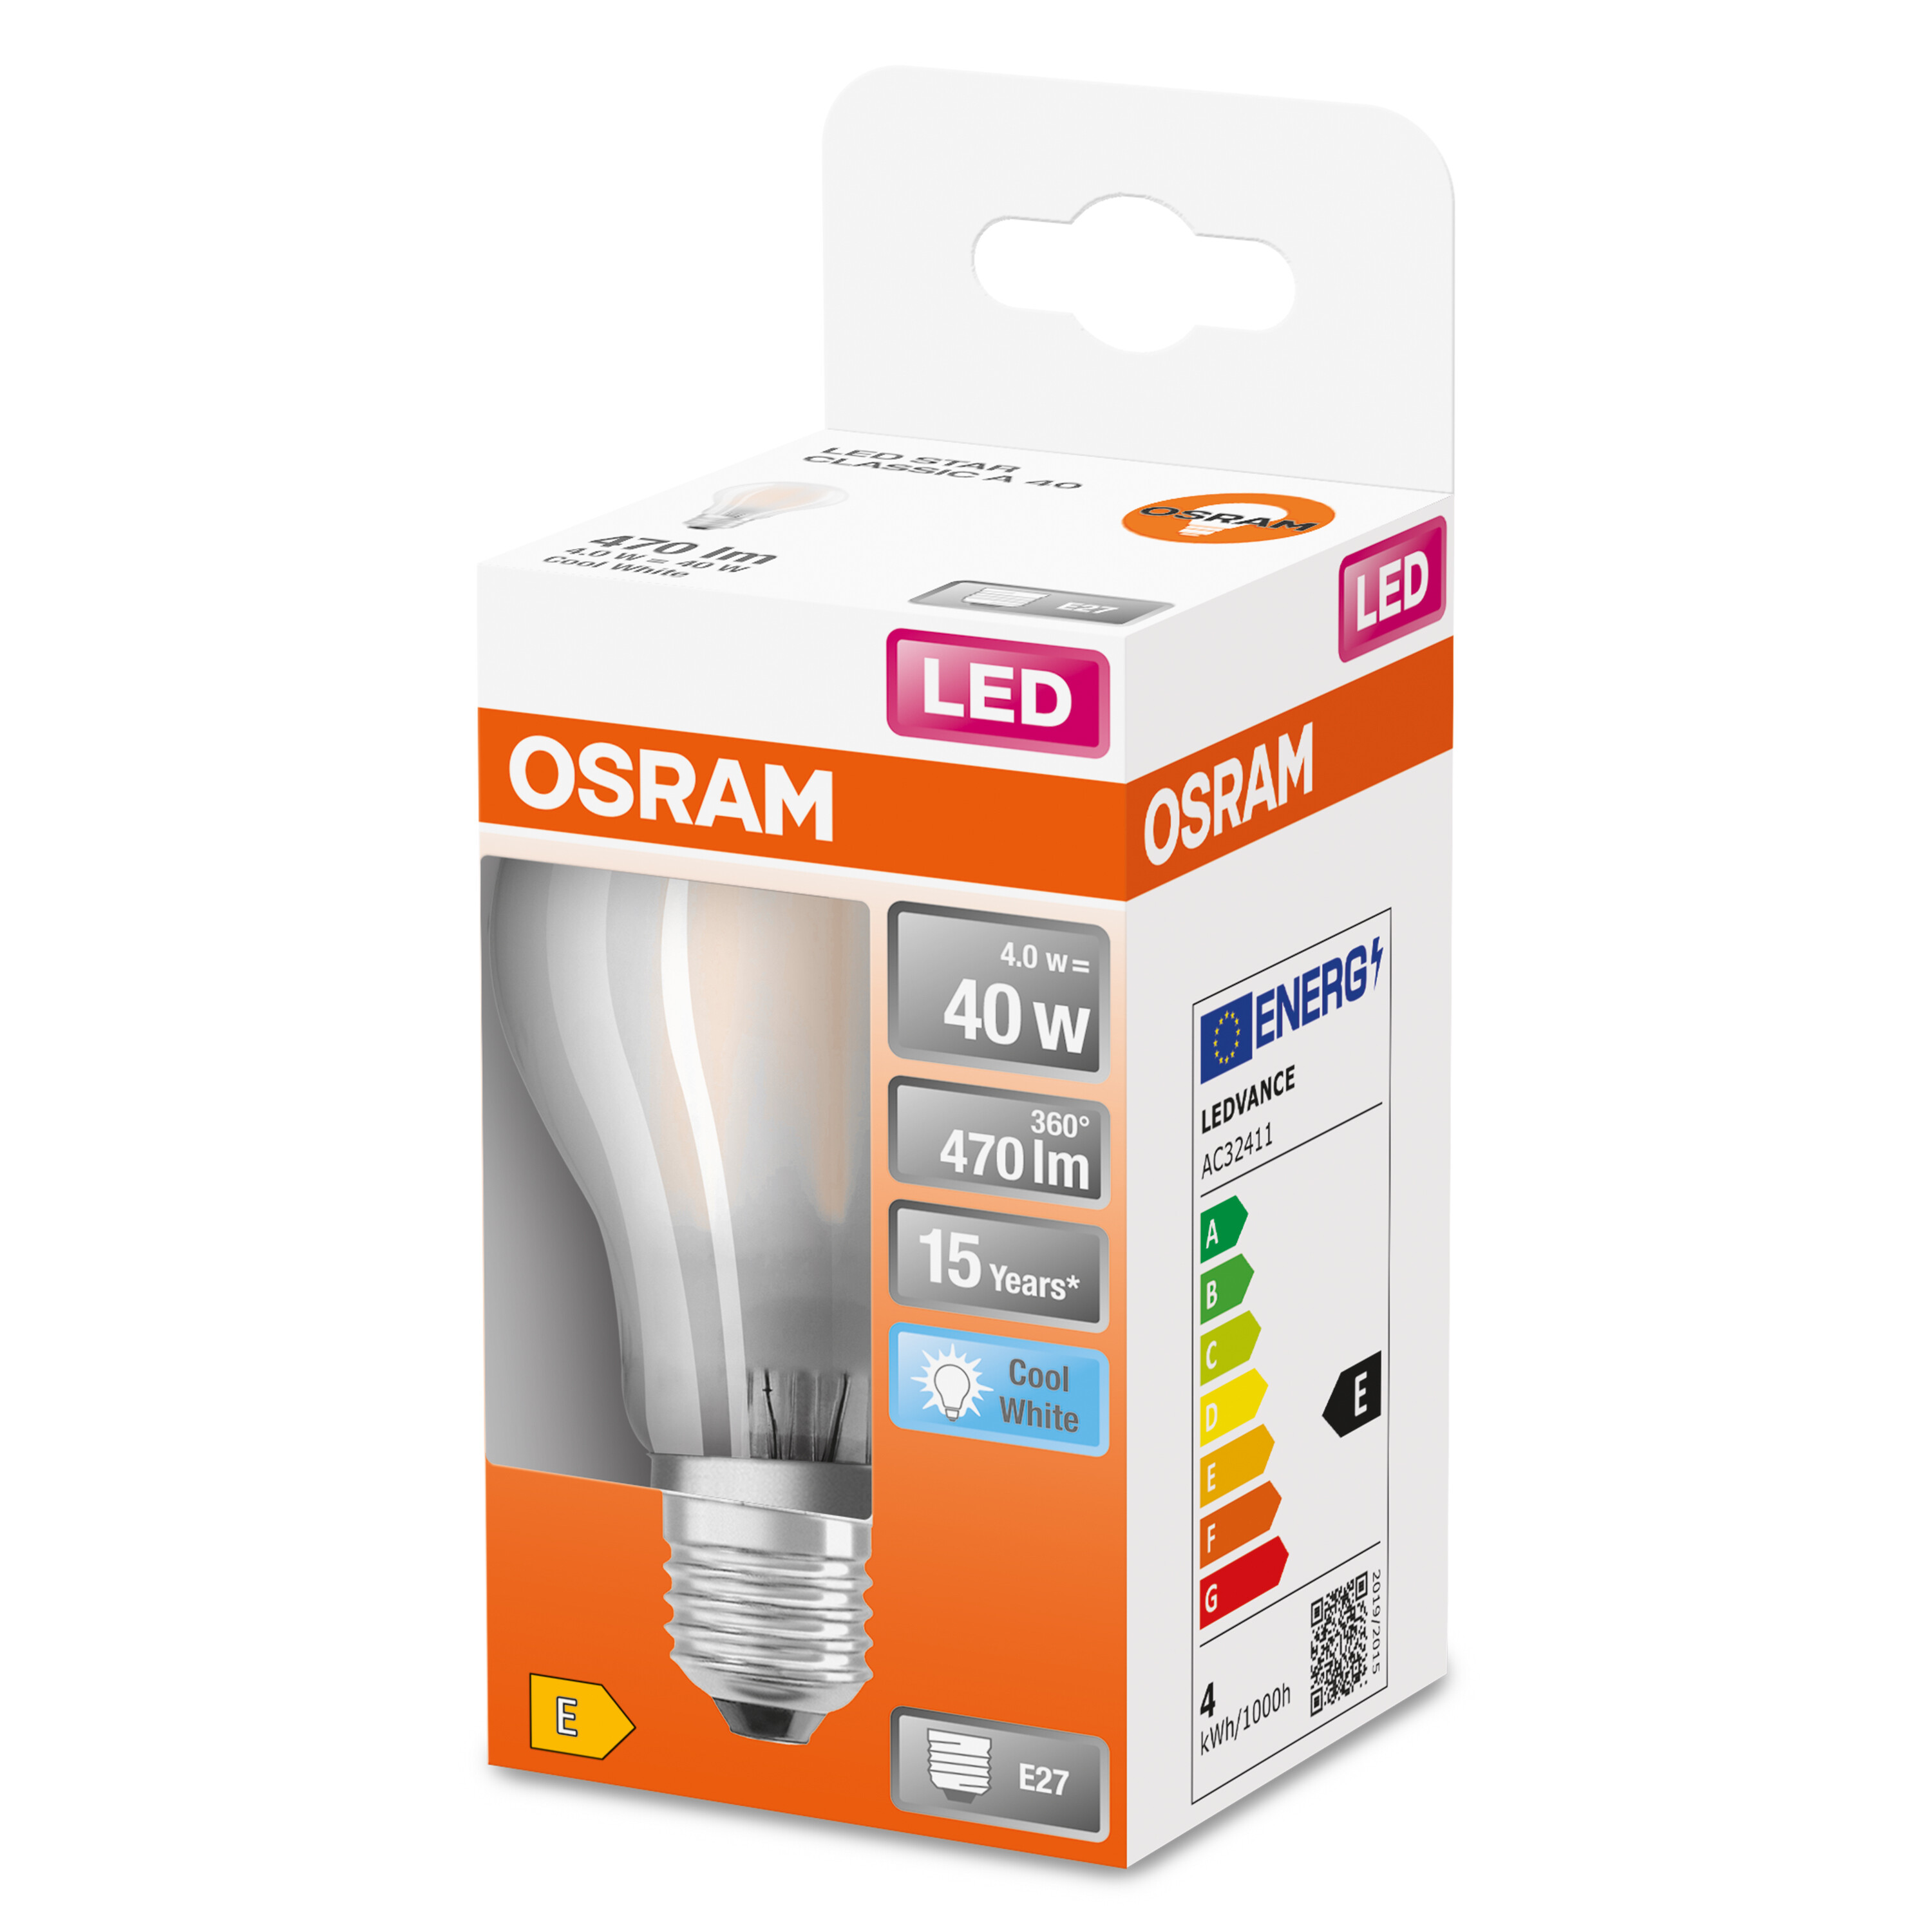 OSRAM  LED Retrofit CLASSIC Kaltweiß Lampe A Lumen 470 LED